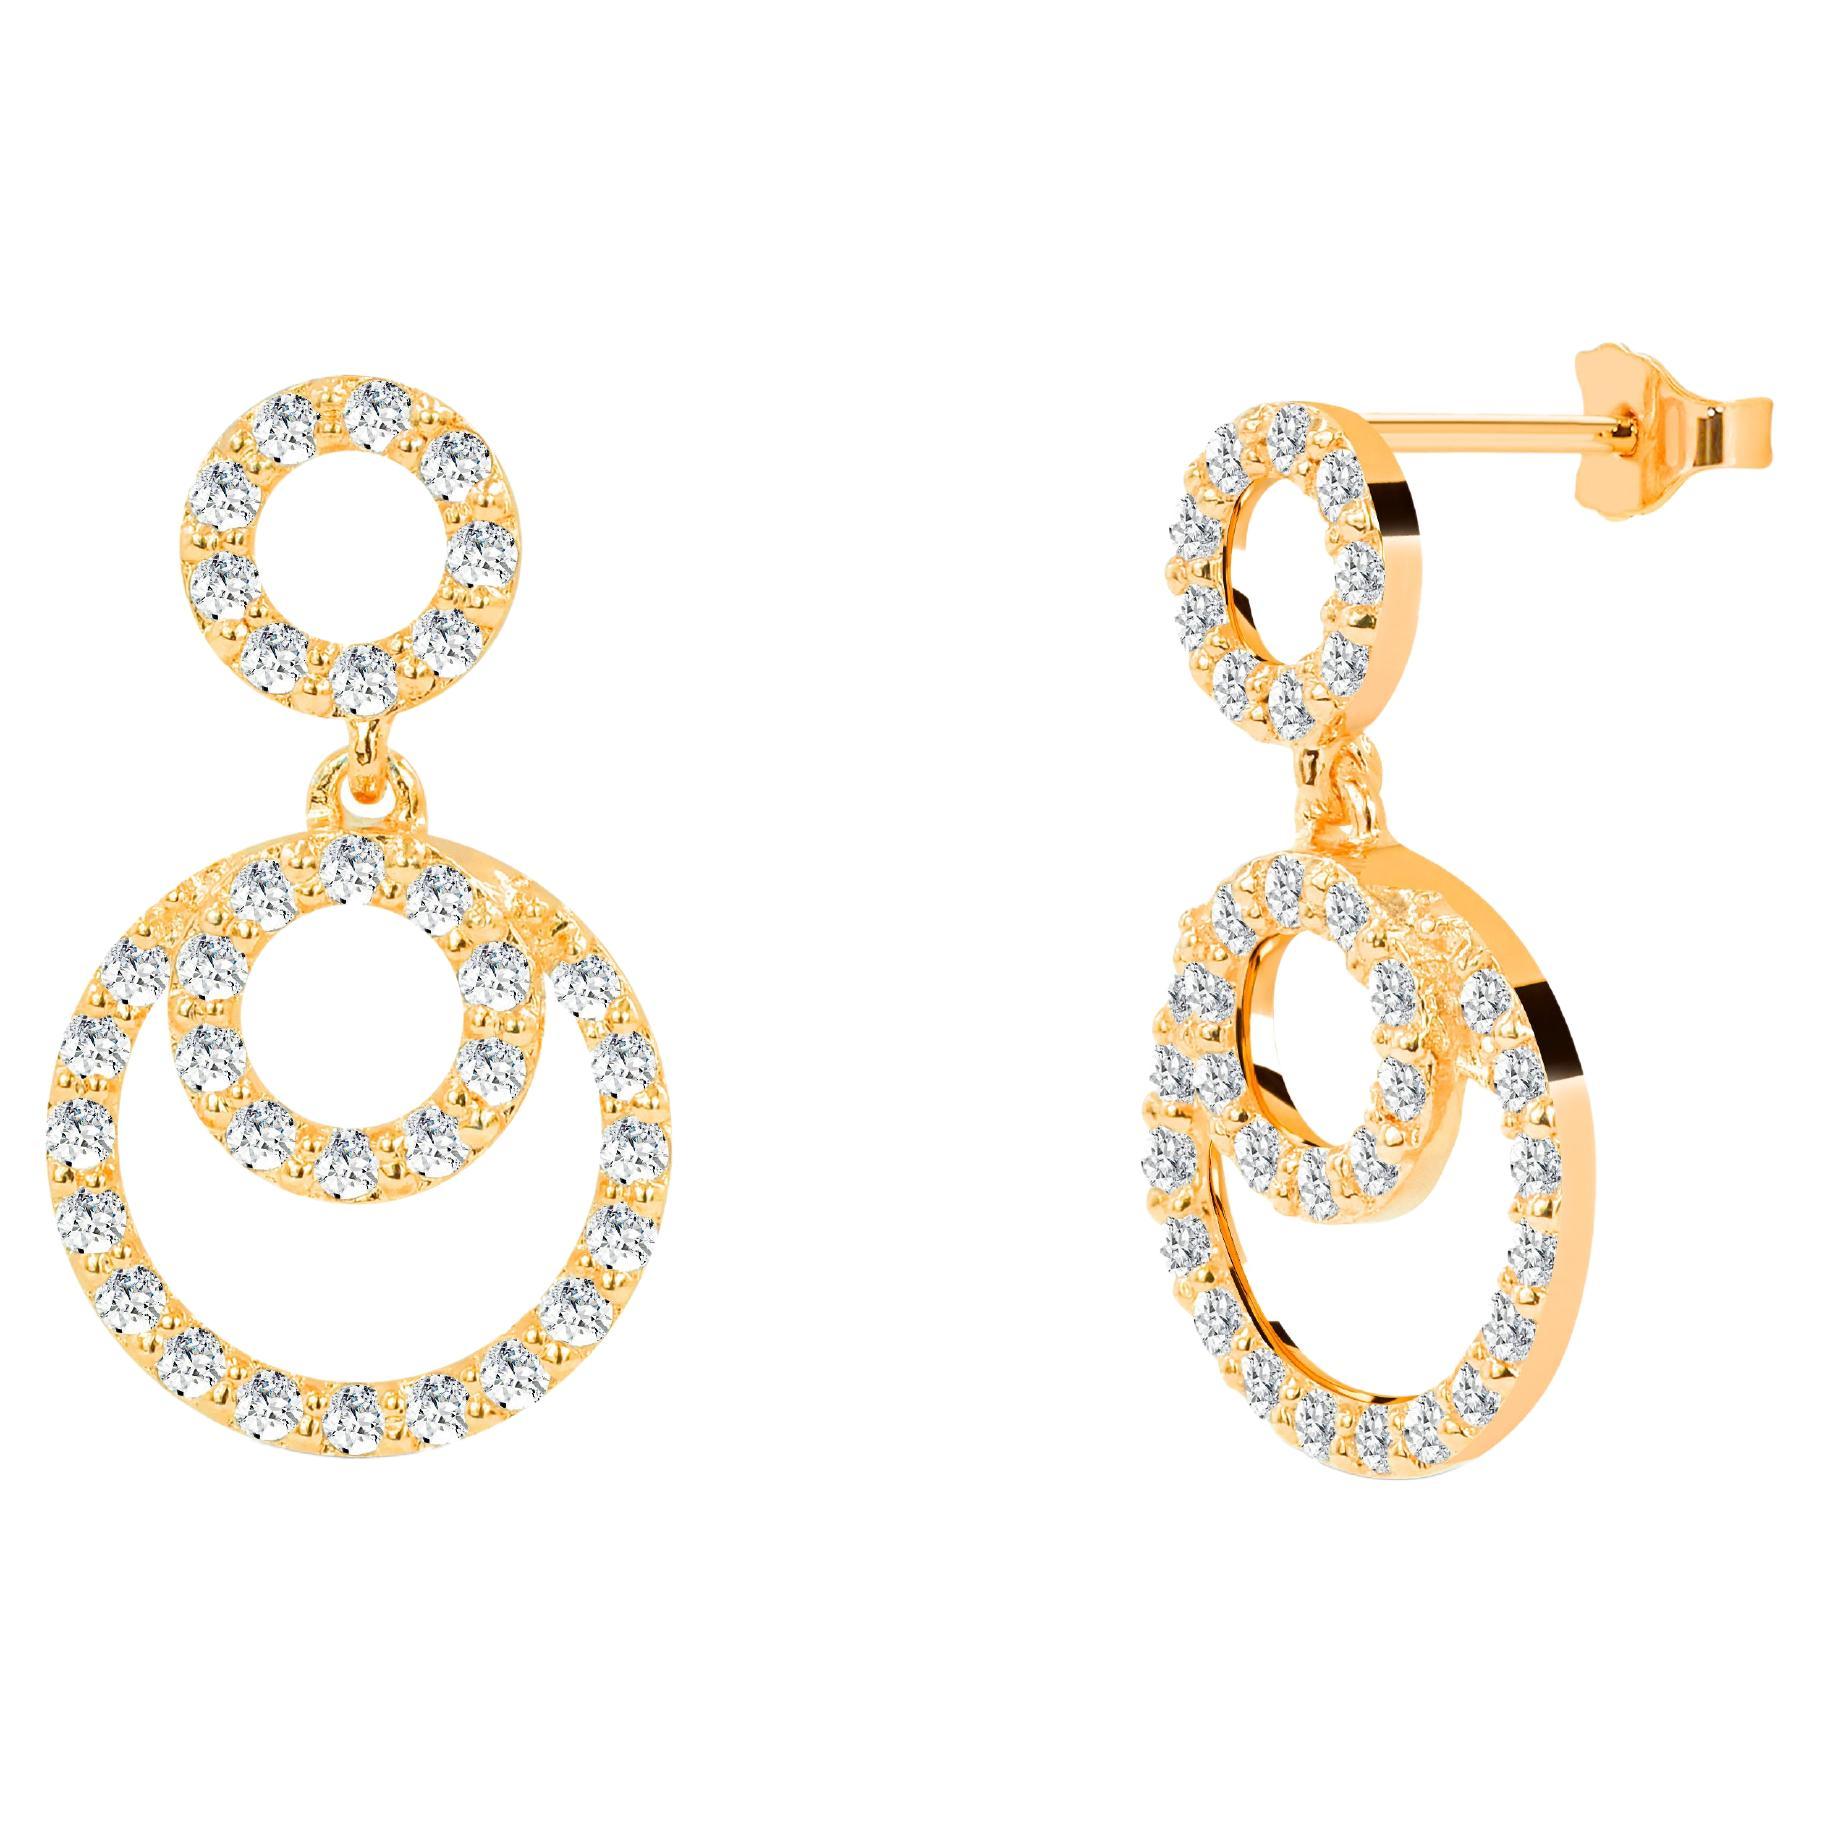 0.51ct Diamond Circle Studs Earrings in 14k Gold